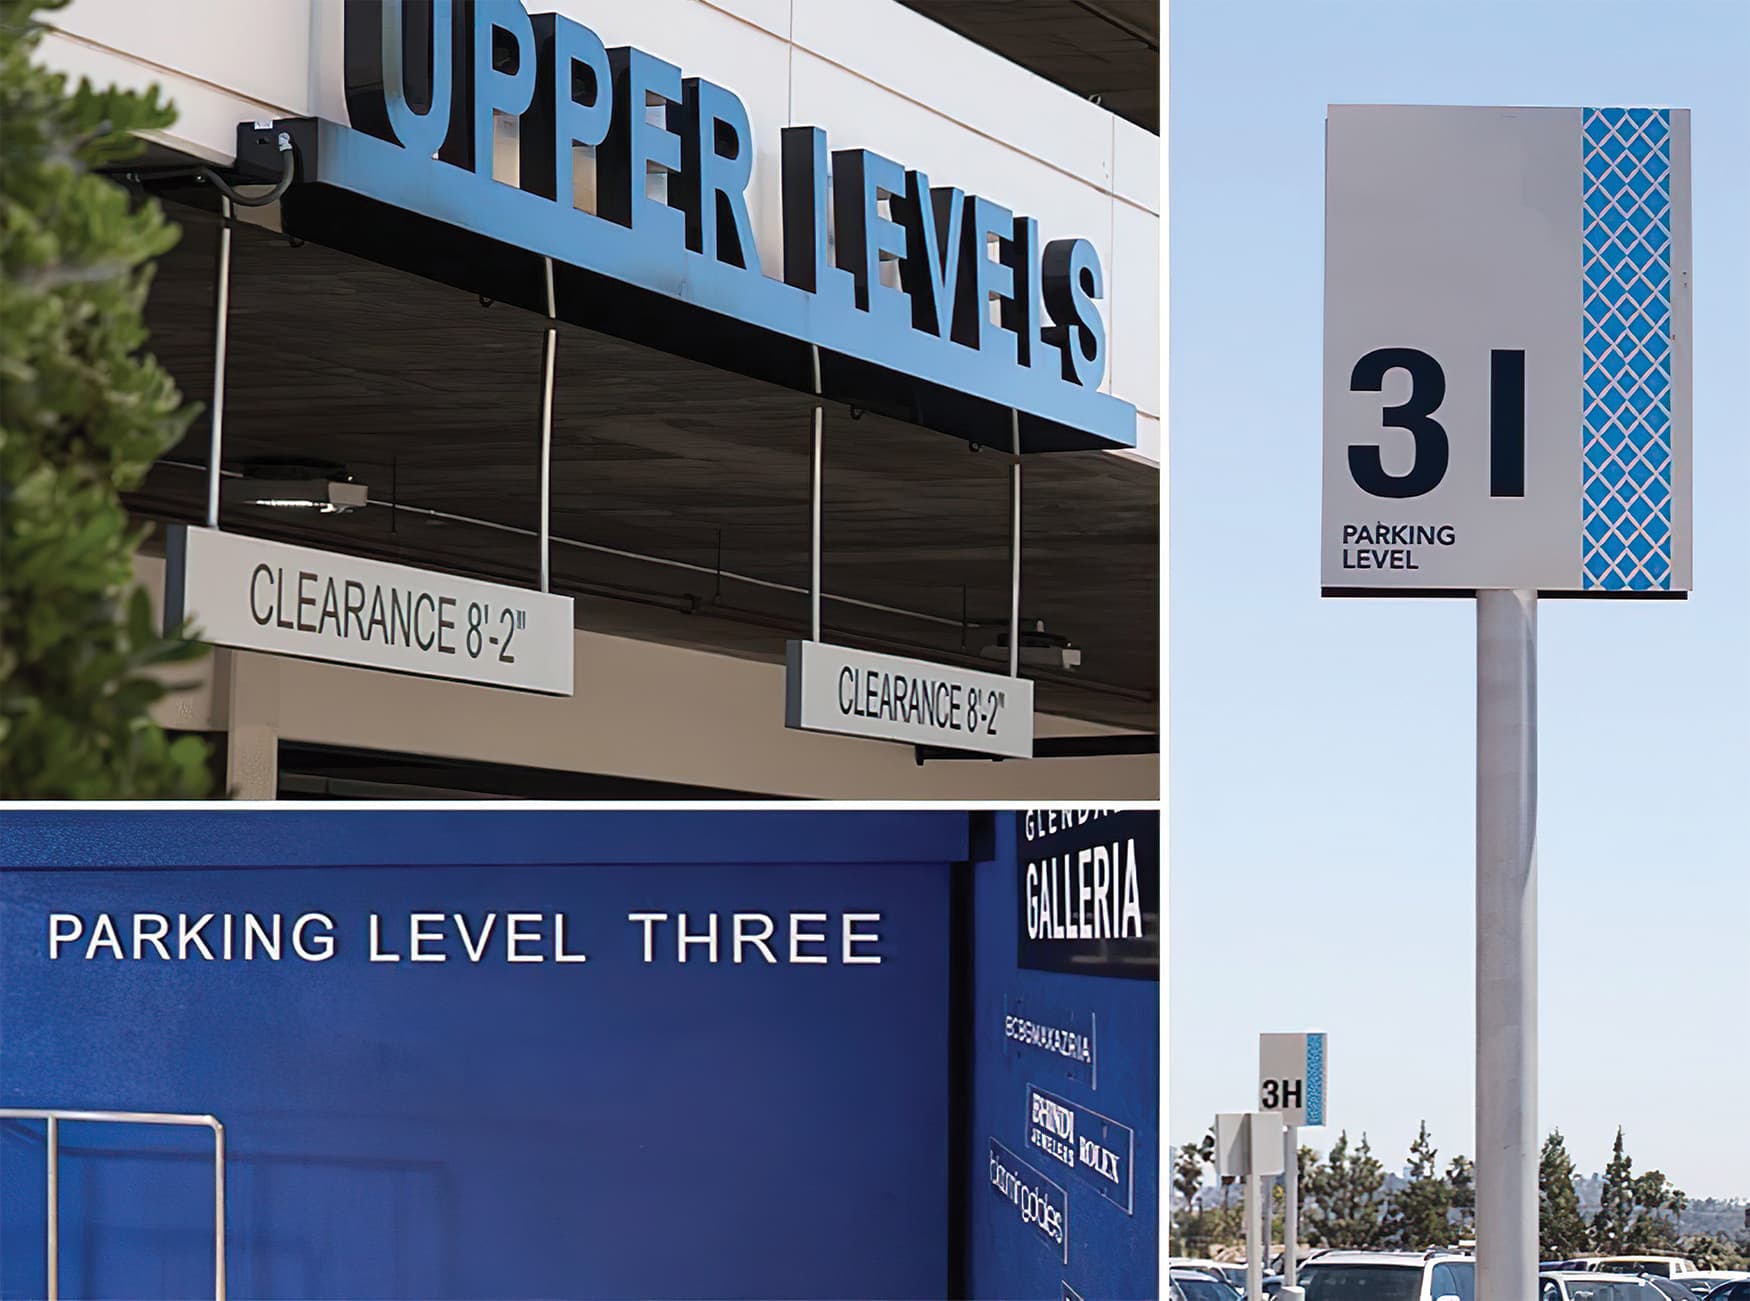 Glendale Galleria. A retail destination in Glendale, California. Parking Garage Design, Graphics, and Signage.